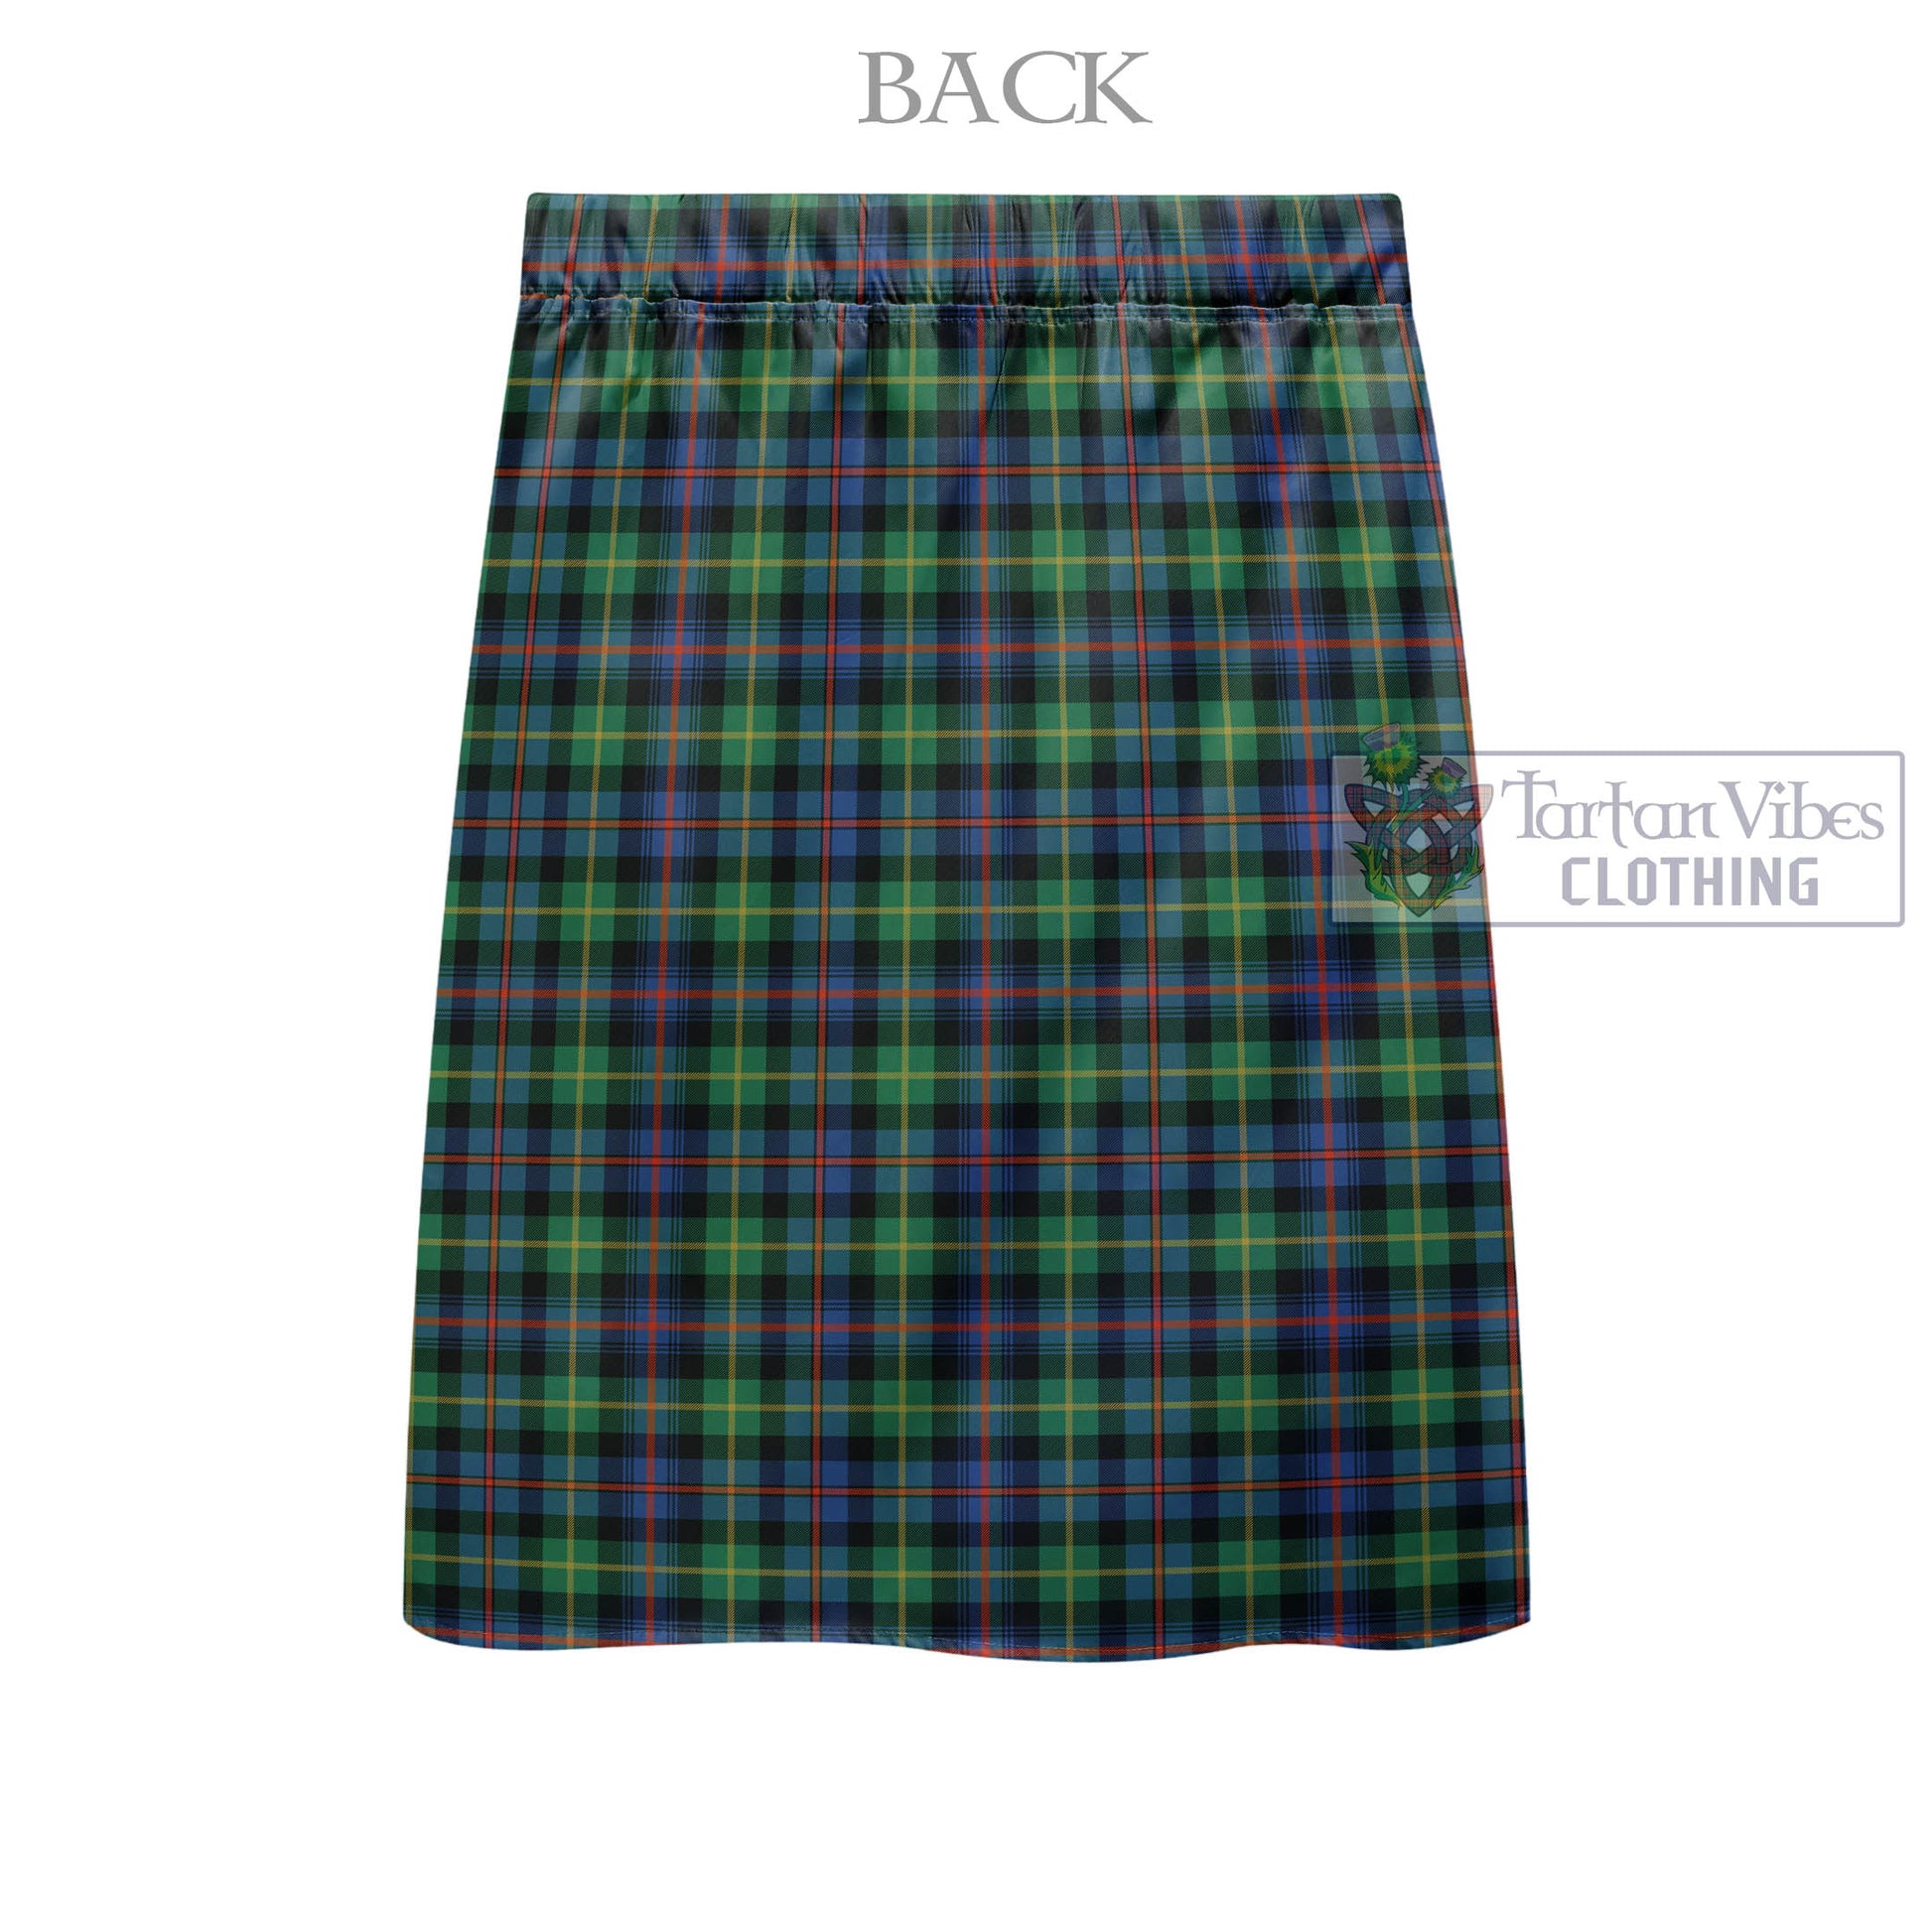 Tartan Vibes Clothing Farquharson Ancient Tartan Men's Pleated Skirt - Fashion Casual Retro Scottish Style